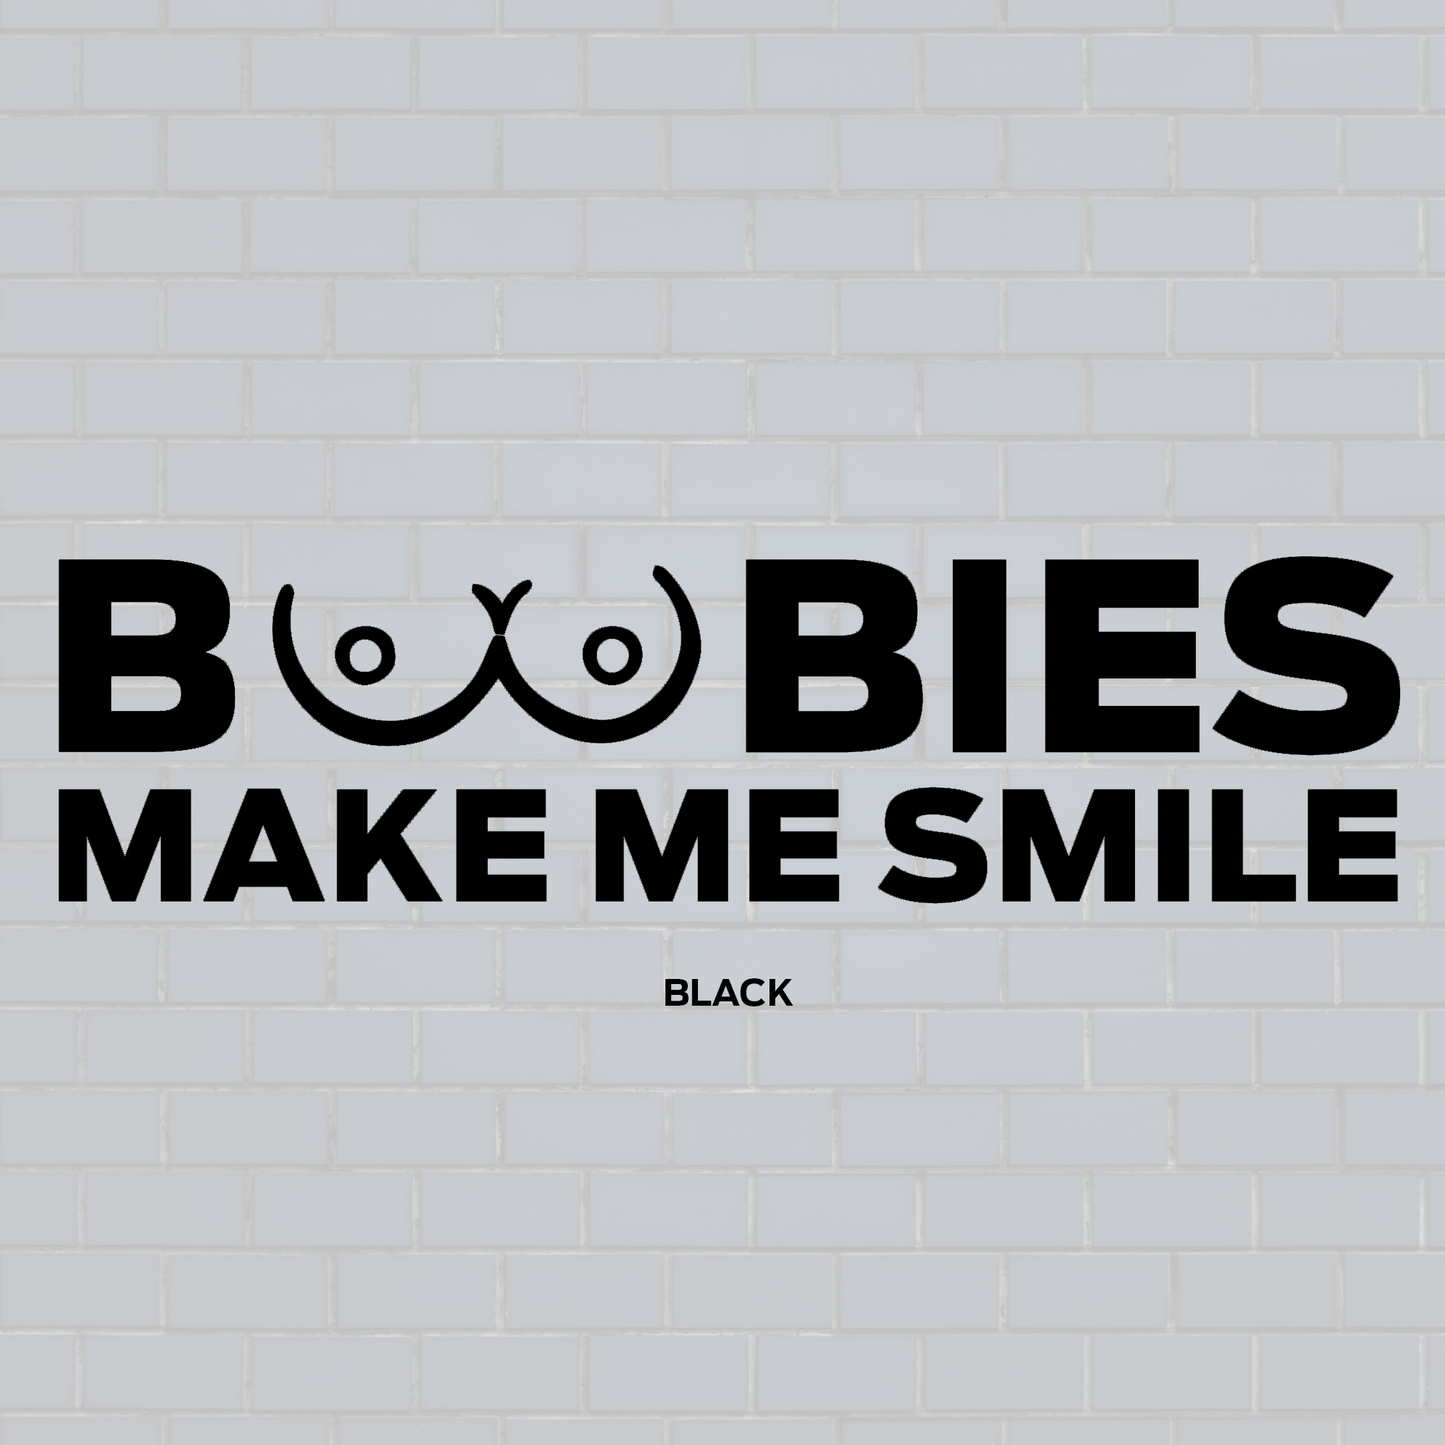 Boobies make me smile funny decal.